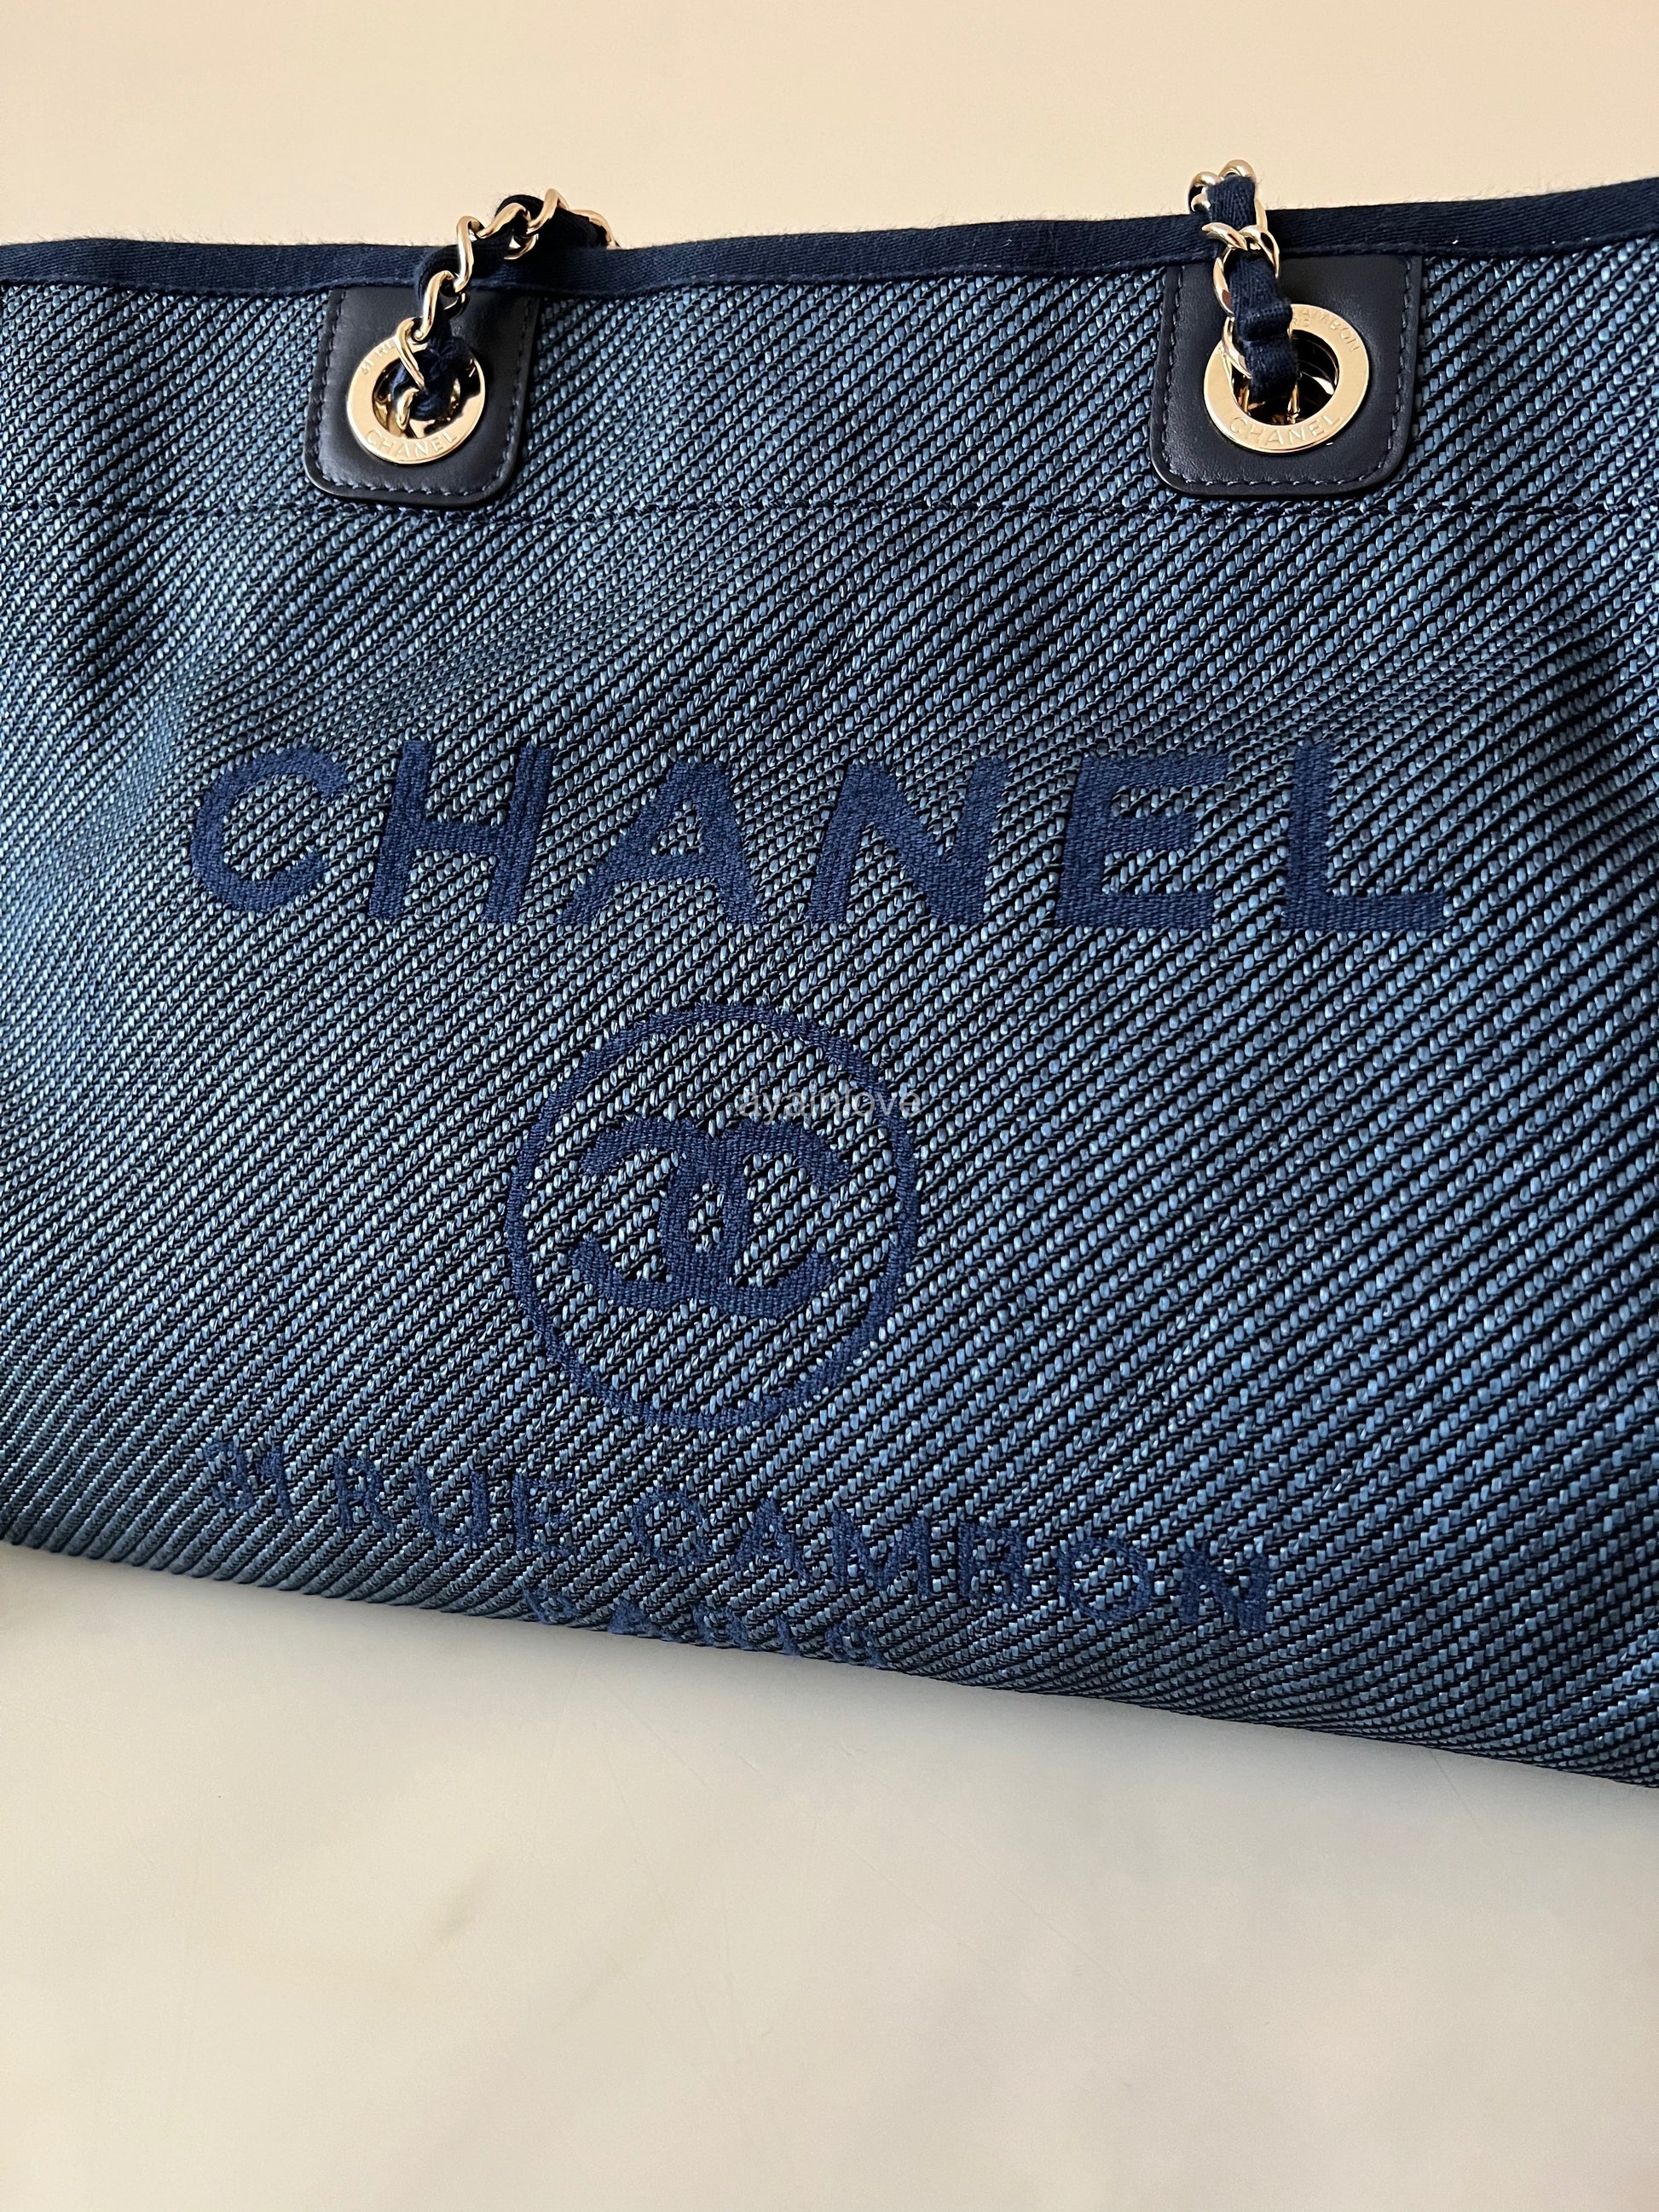 CHANEL Navy Blue Canvas Glitter Small Medium Deauville Tote Bag